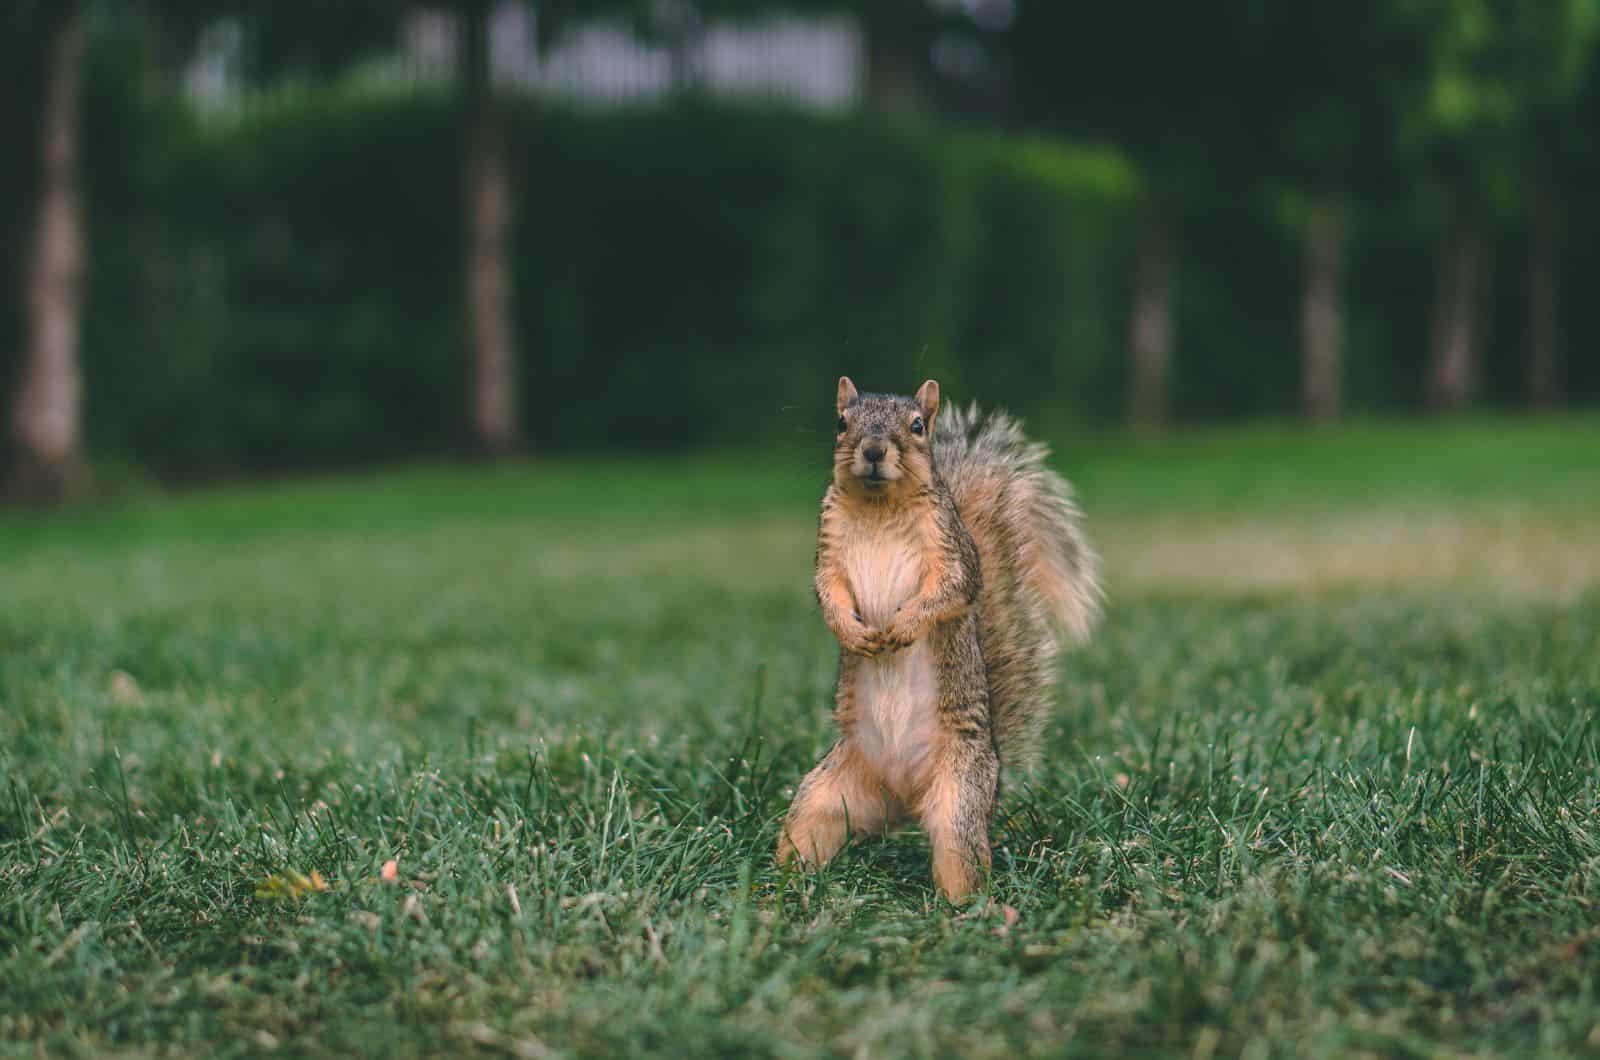 Squirrel standing on grass